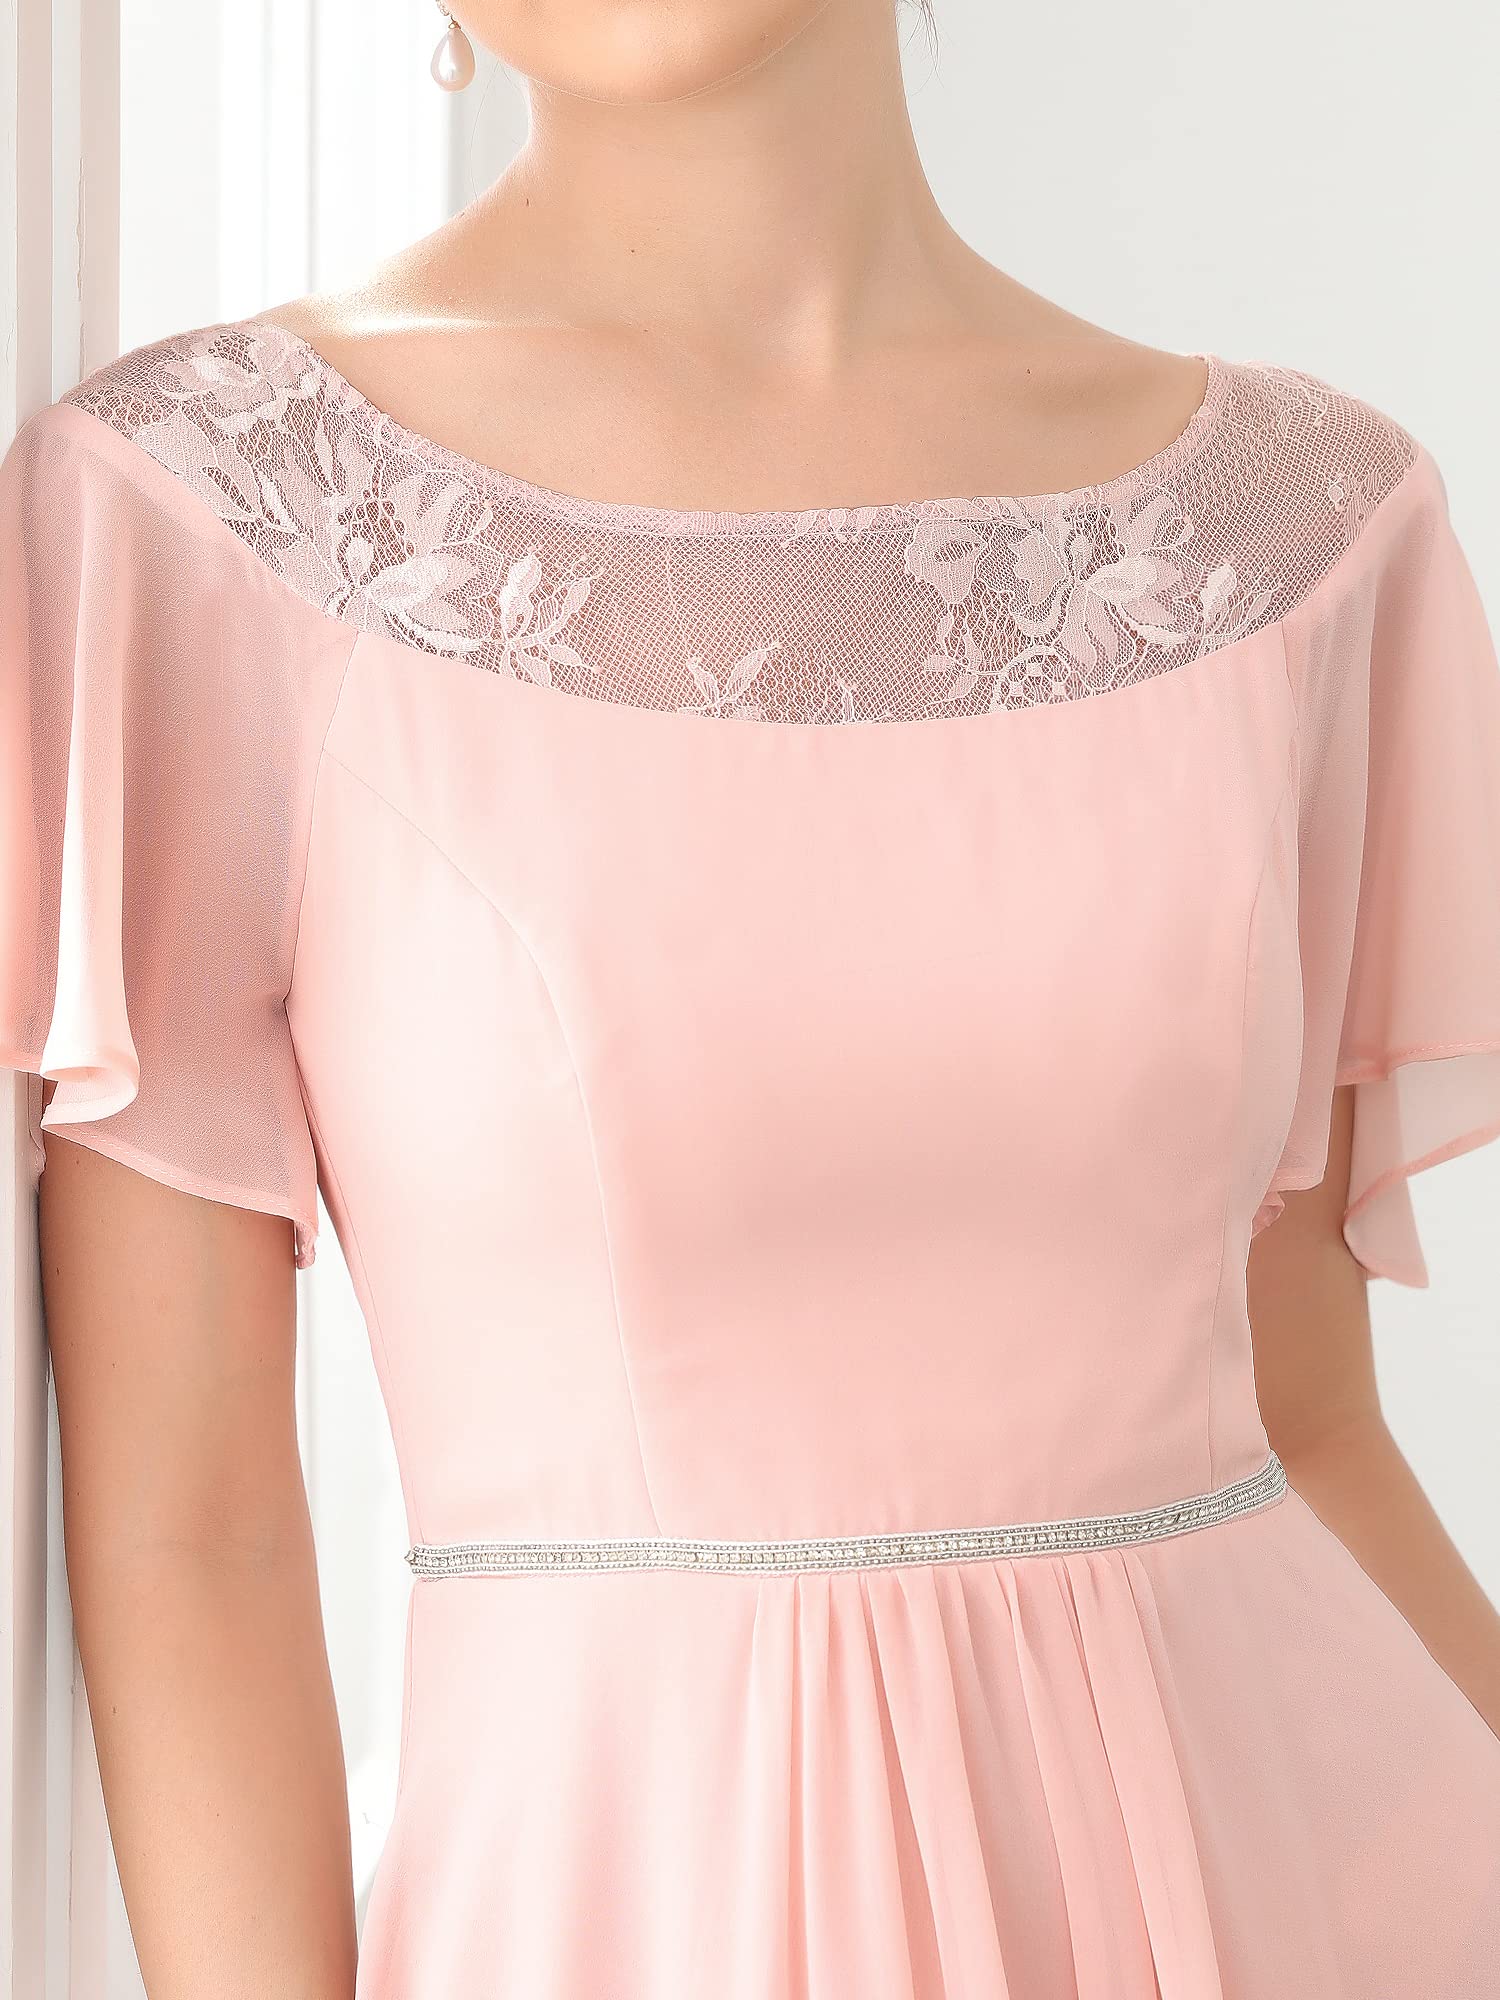 Ever-Pretty Women's Elegant A-line Short Sleeve High Low Chiffon Midi Bridesmaid Dress 0465